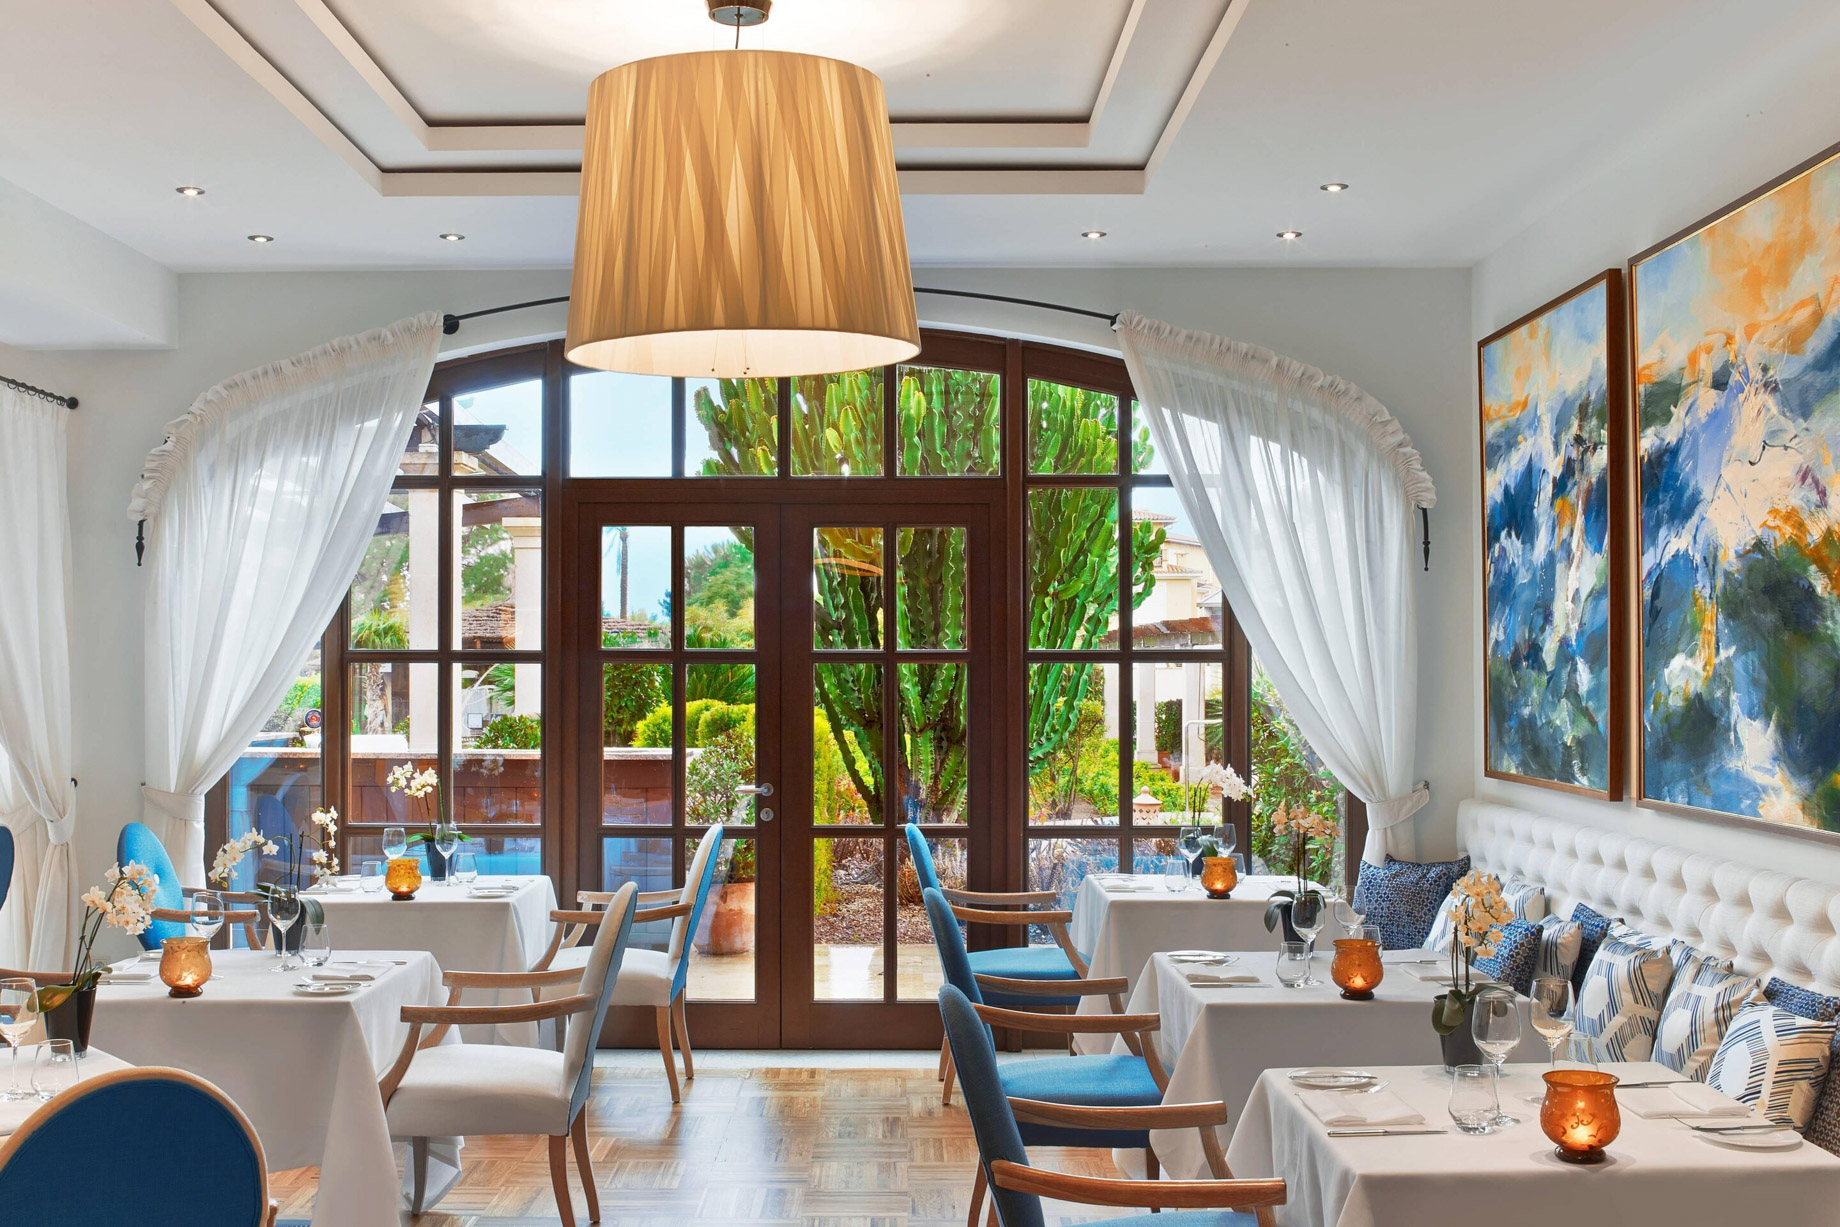 The St. Regis Mardavall Mallorca Resort – Palma de Mallorca, Spain – Aqua Restaurant Decor